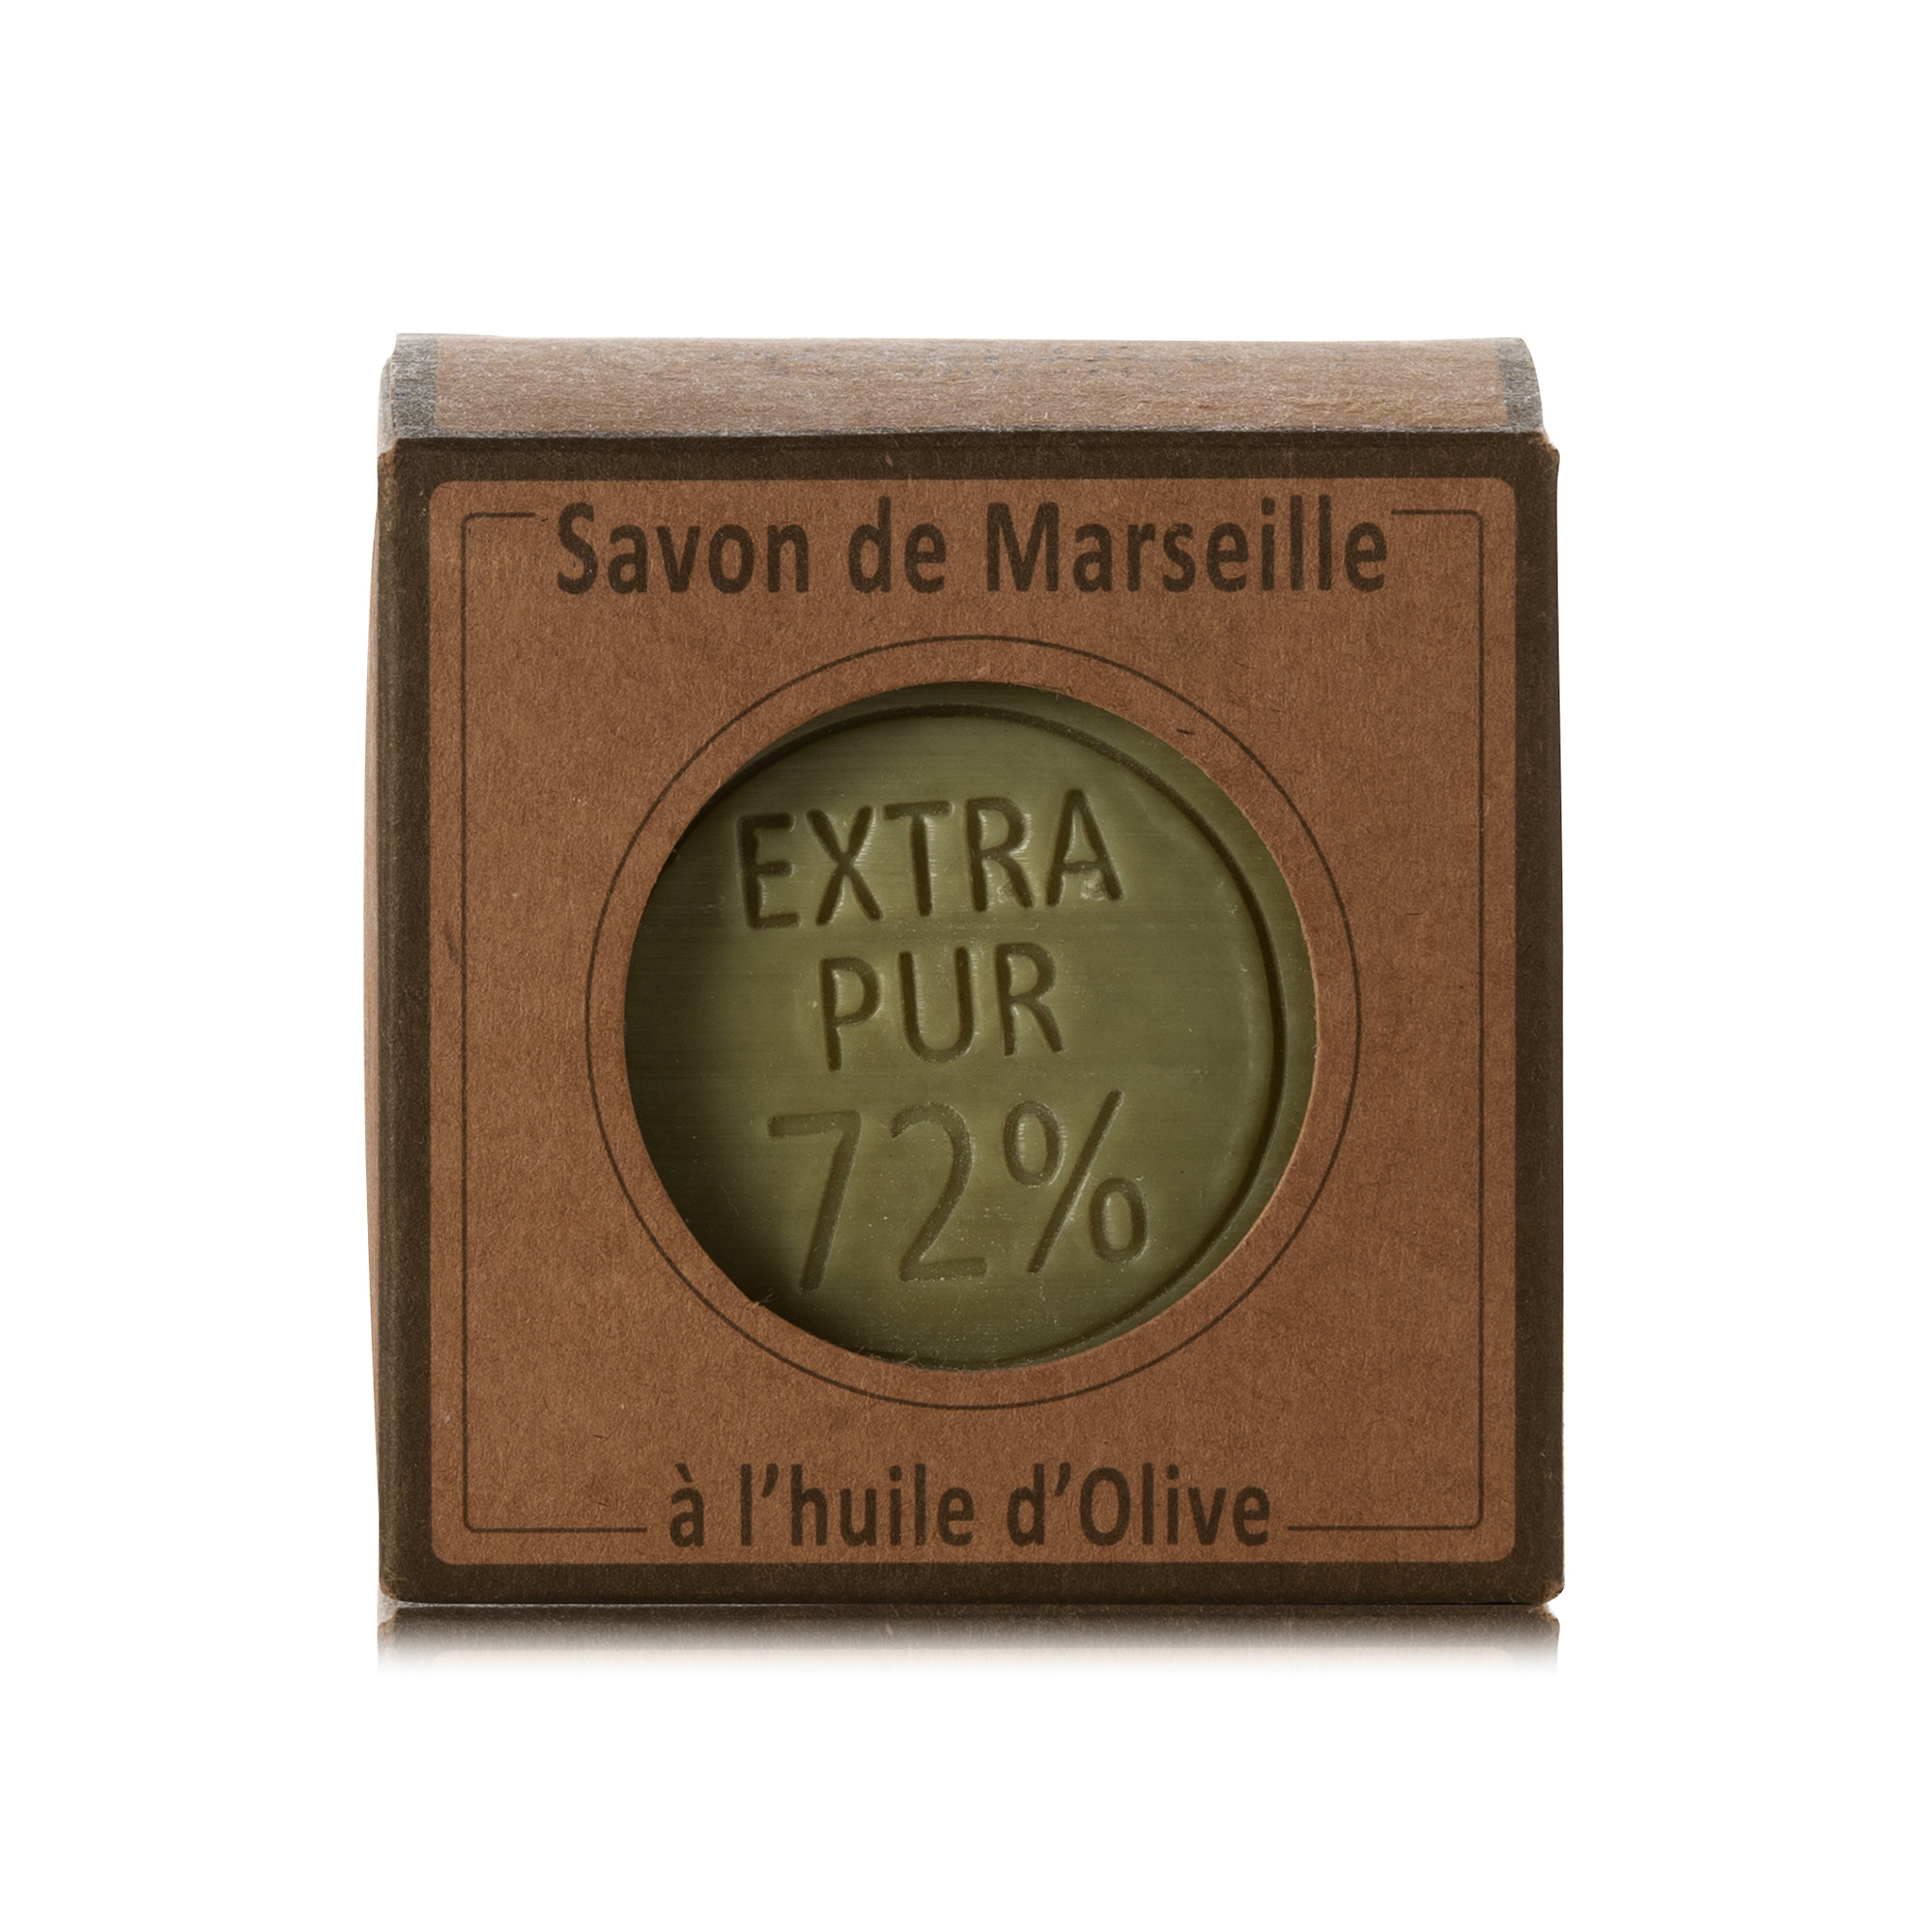 Huile d'olive Savon de Marseille 72% 300g cube Savon de Marseille